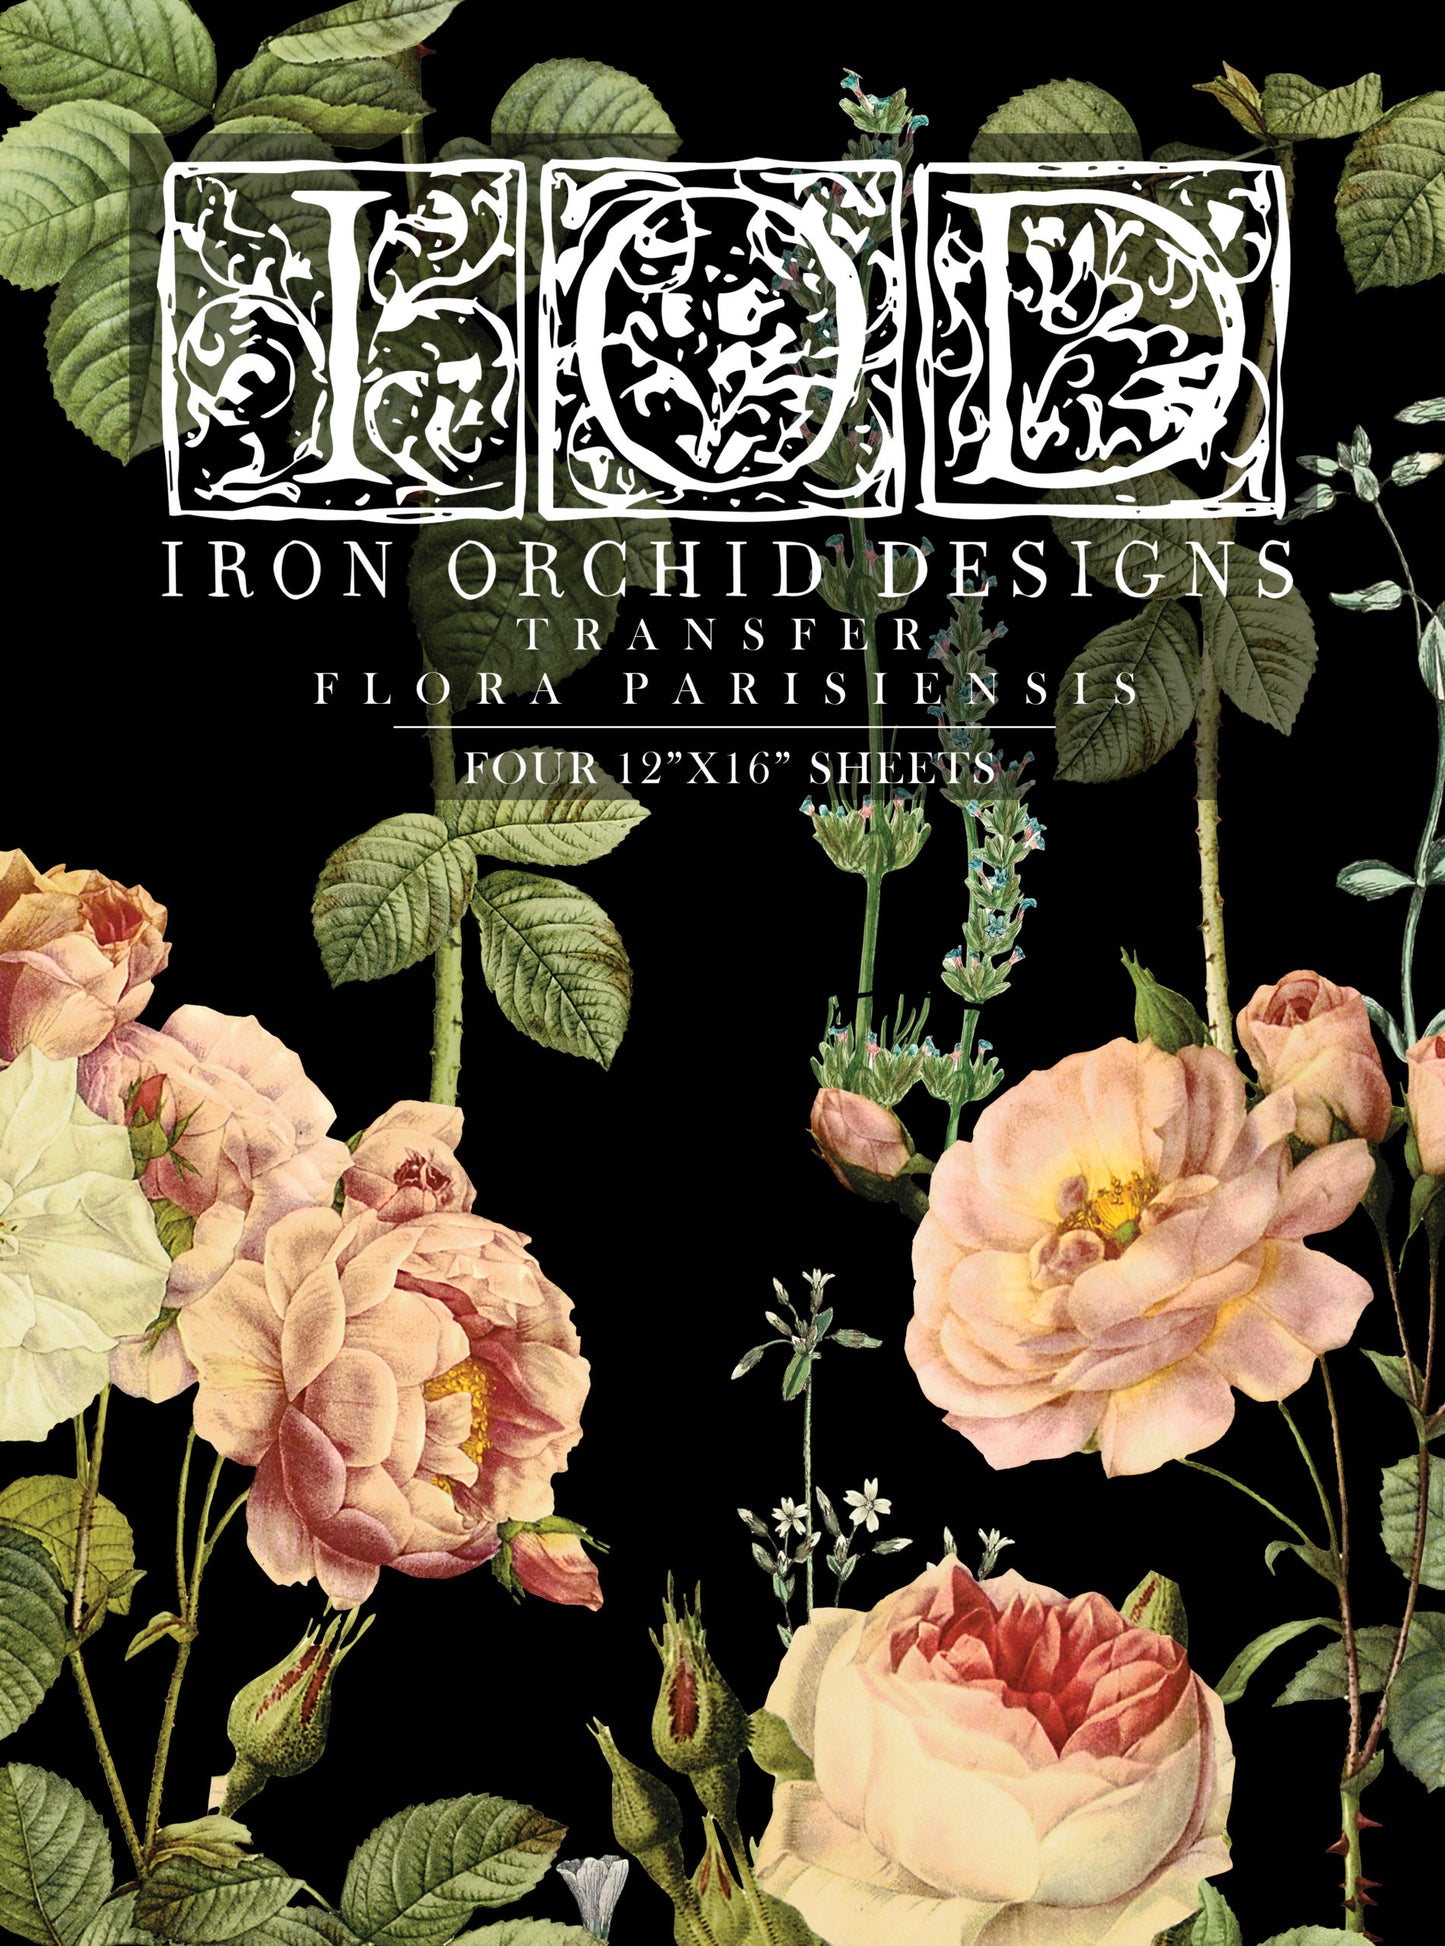 Iron Orchid Designs Flora Parisiensis | IOD Transfer